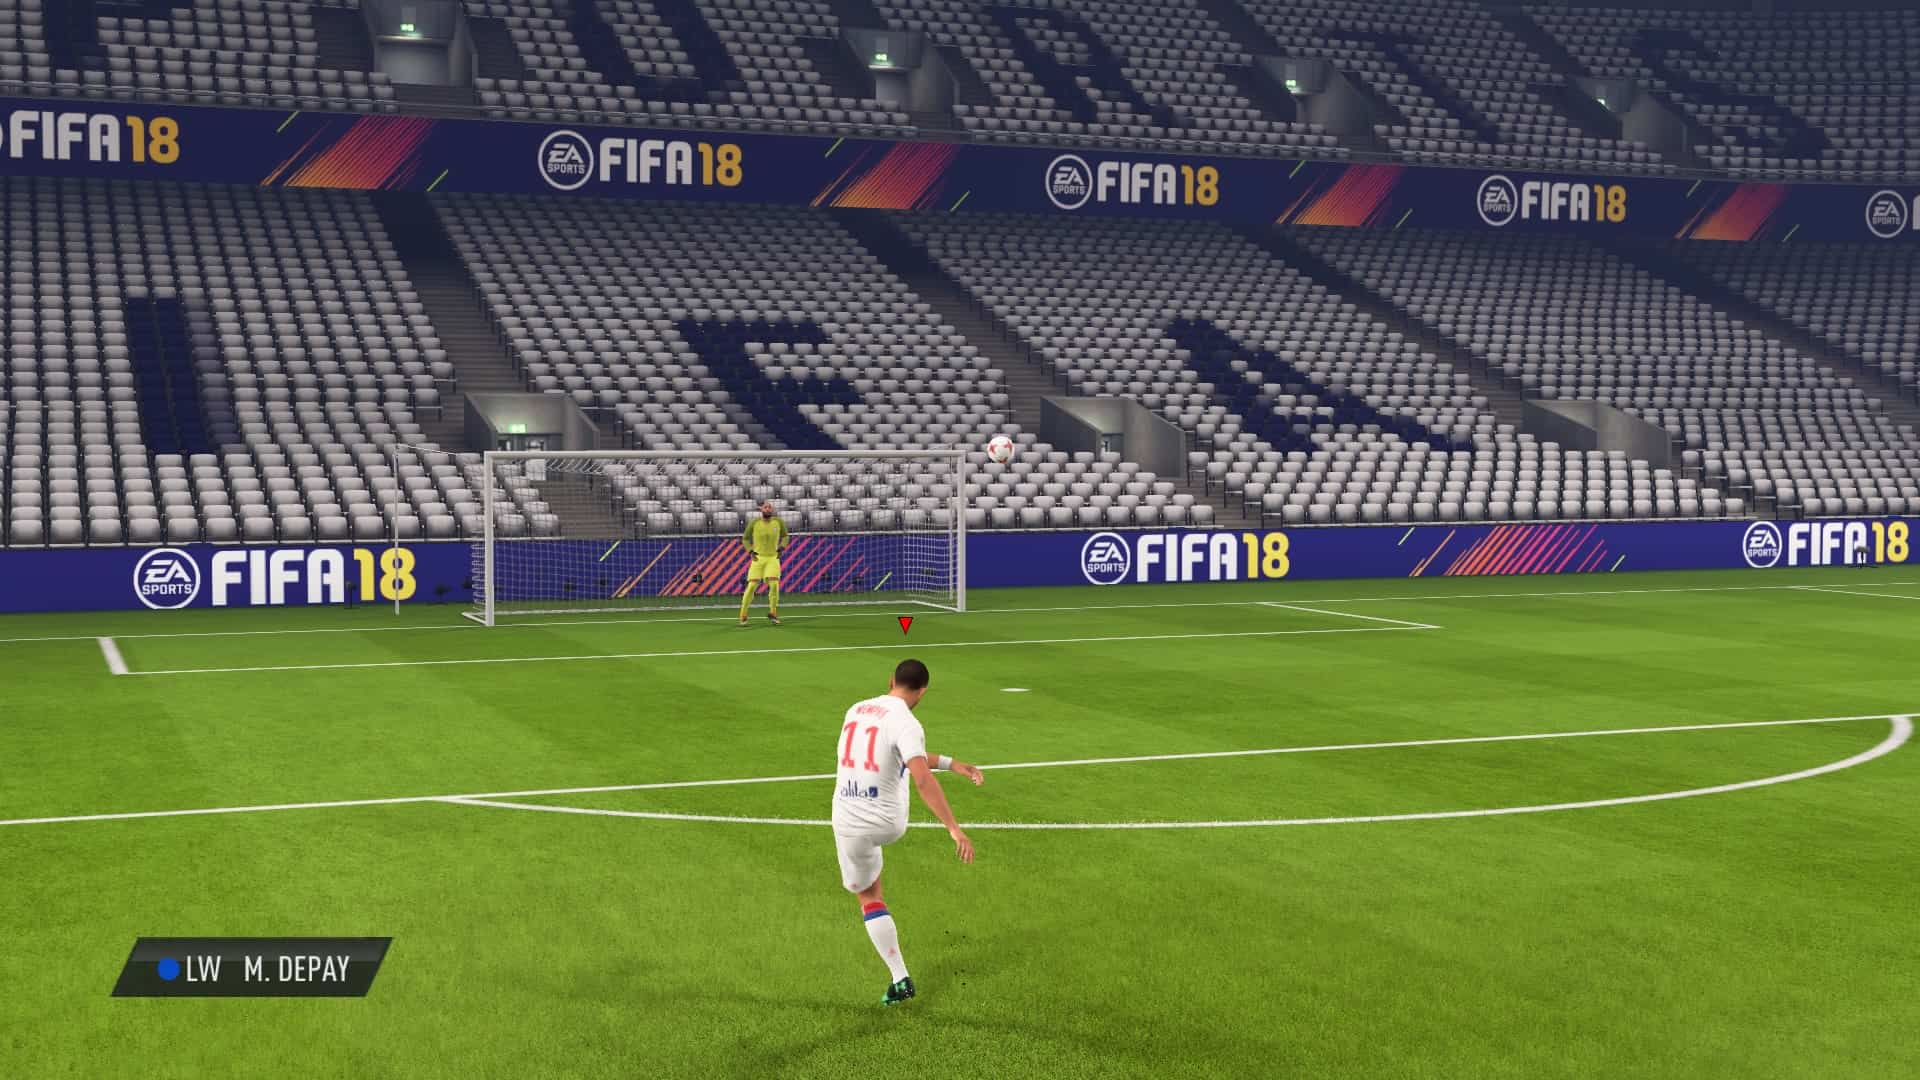 Depay taking a Free Kick in FIFA 18